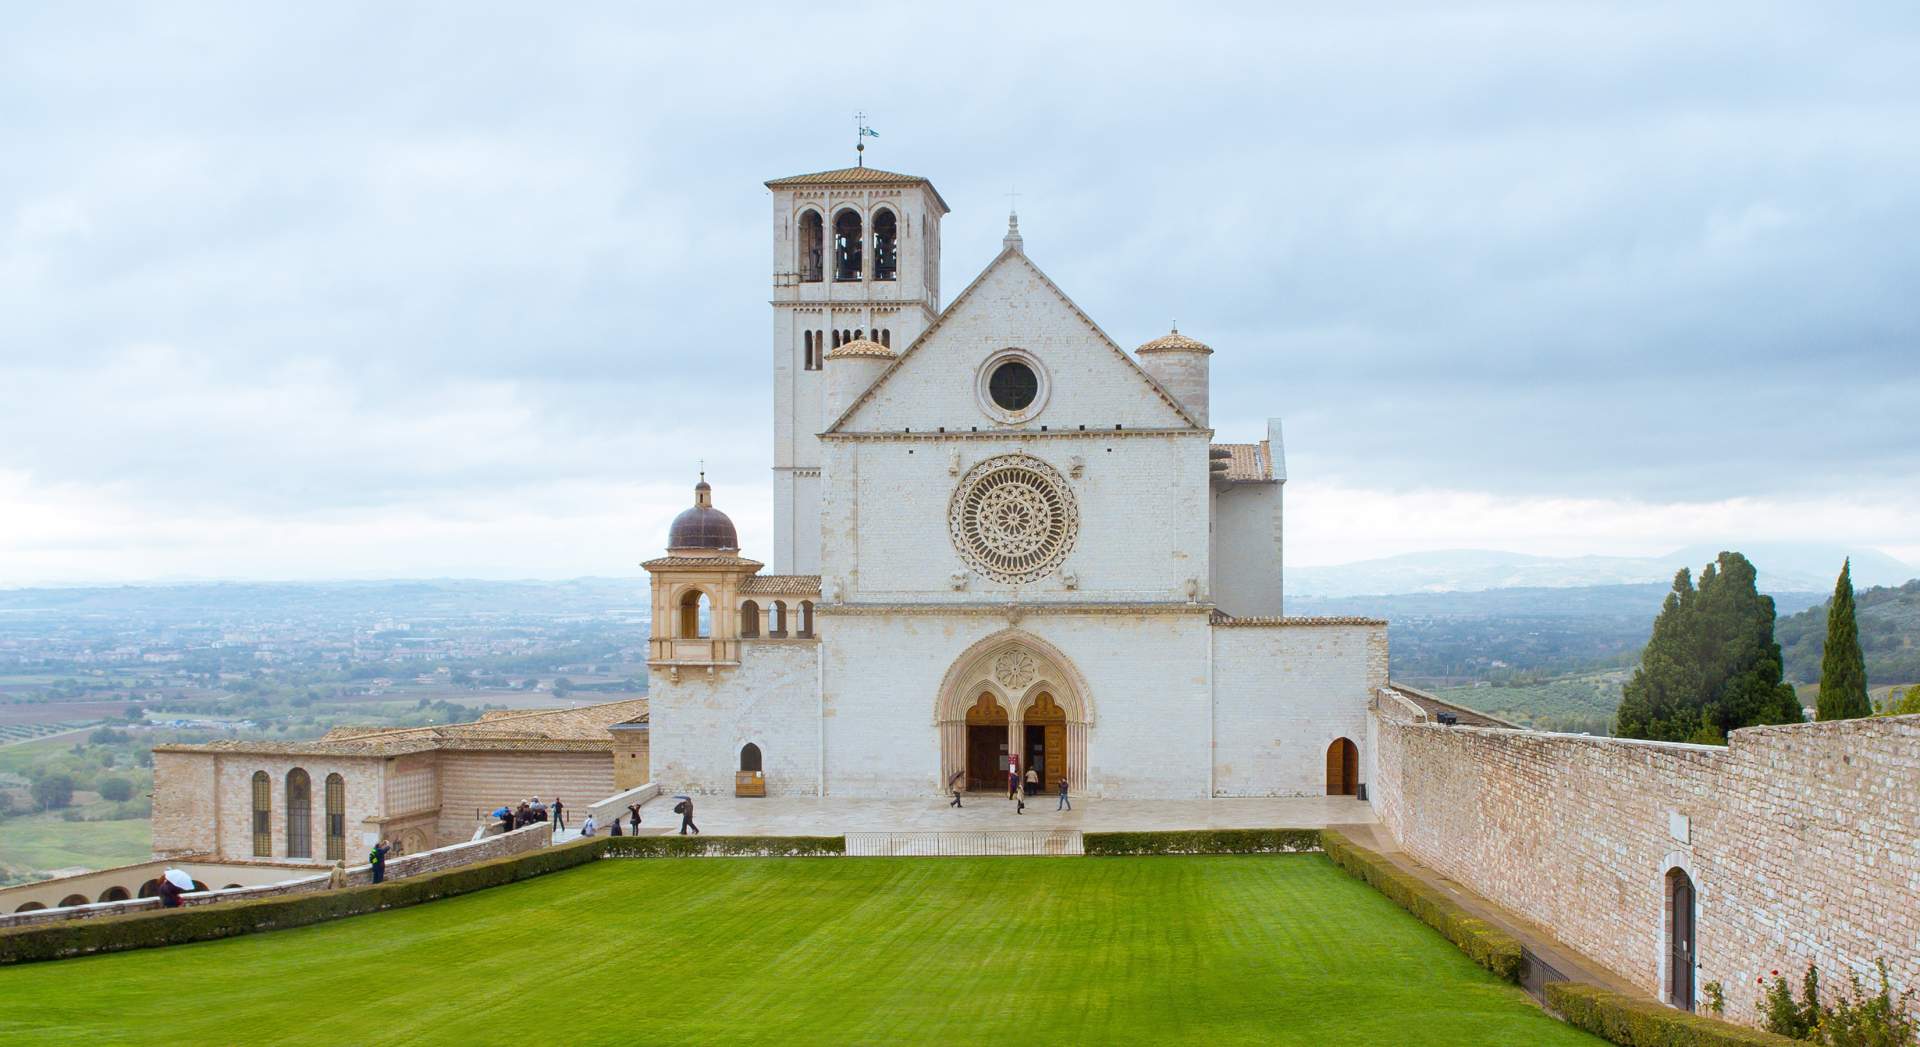 Busreis meerdaagse reis Umbrië - Assisi ©ha11ok from Pixabay